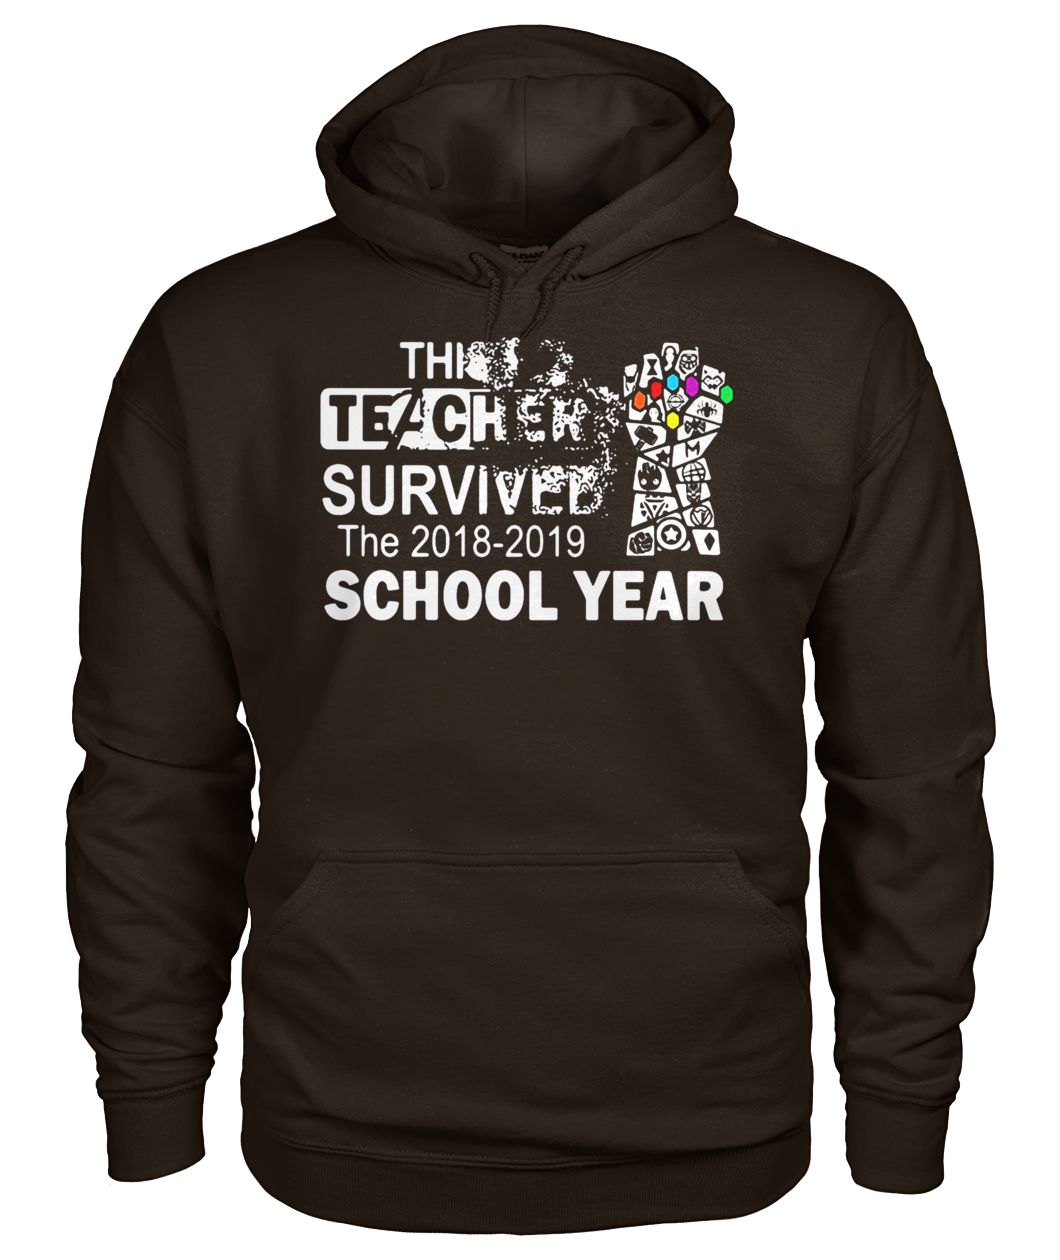 The infinity gauntlet avengers this teacher survived the 2018-2019 school year gildan hoodie